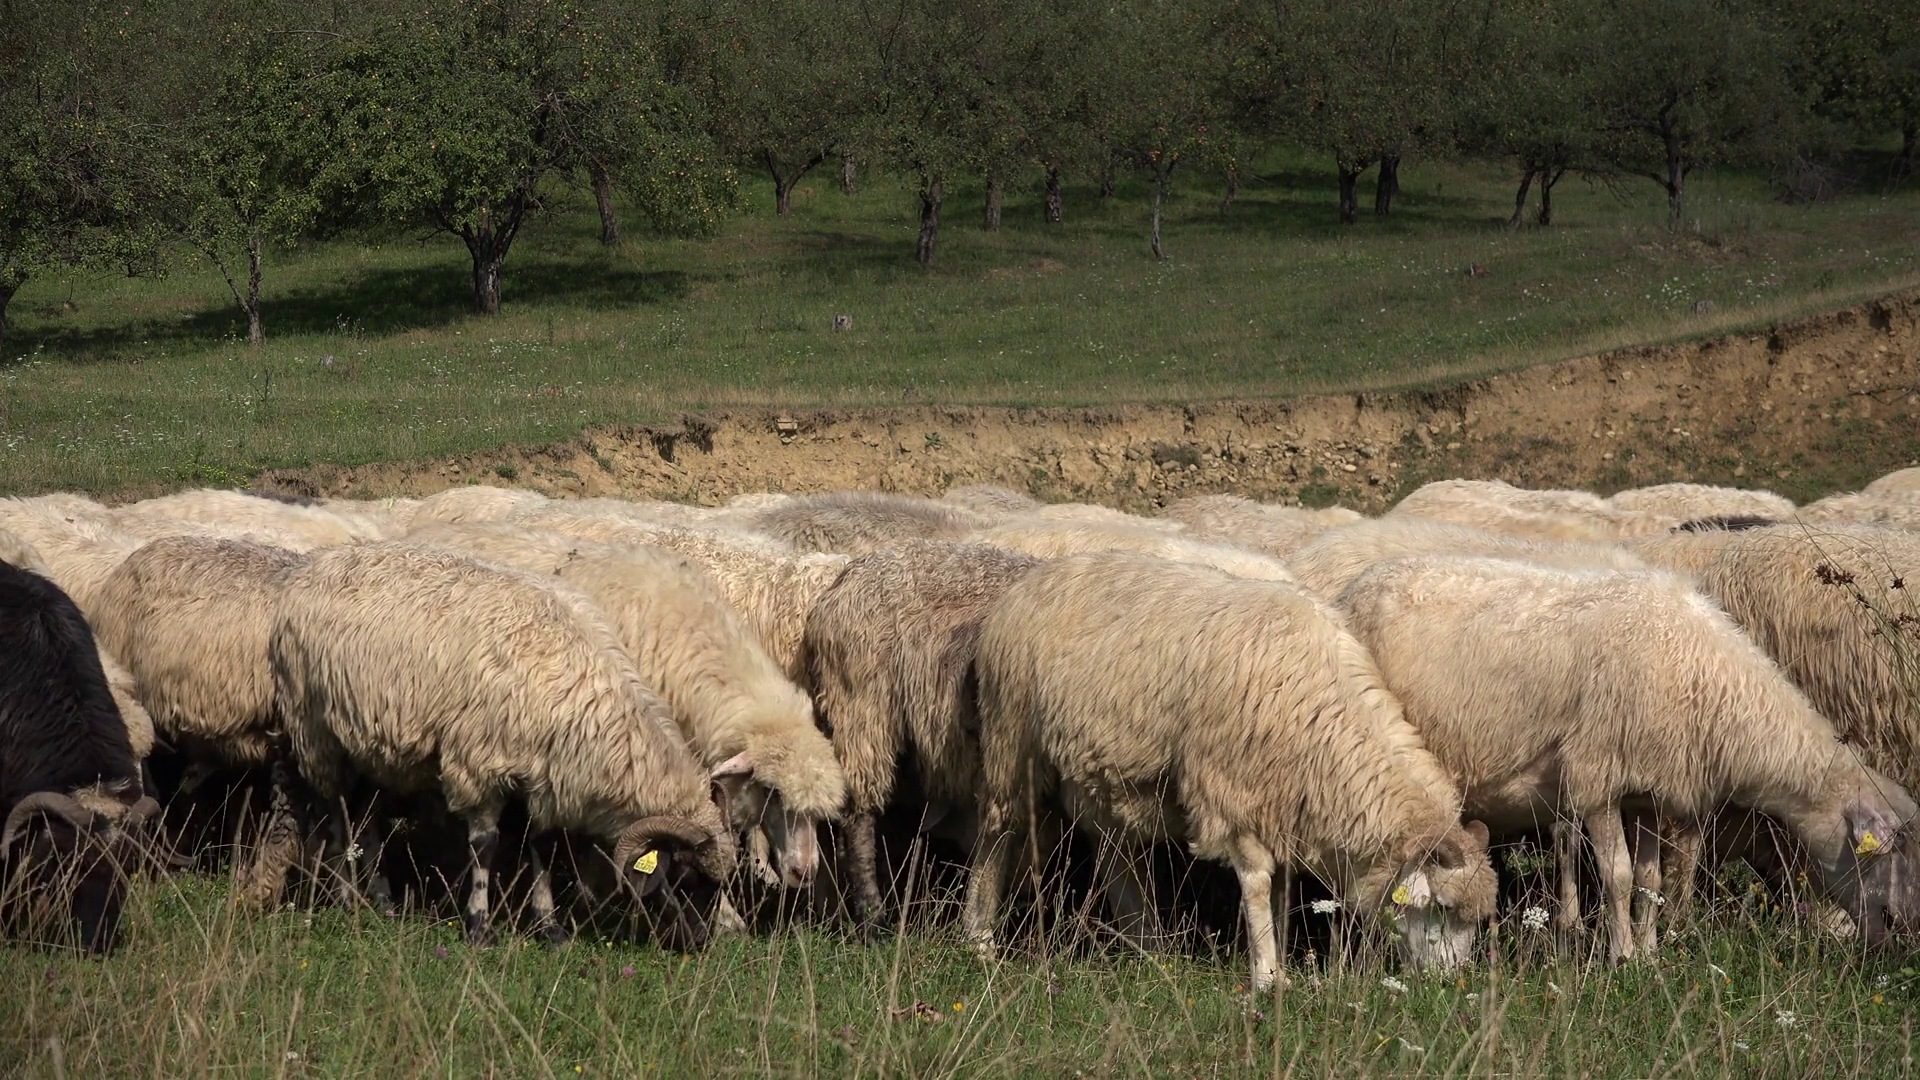 Sheep View, Herd Flock of Lambs Grazing on Grassland, Pastoral Image ...